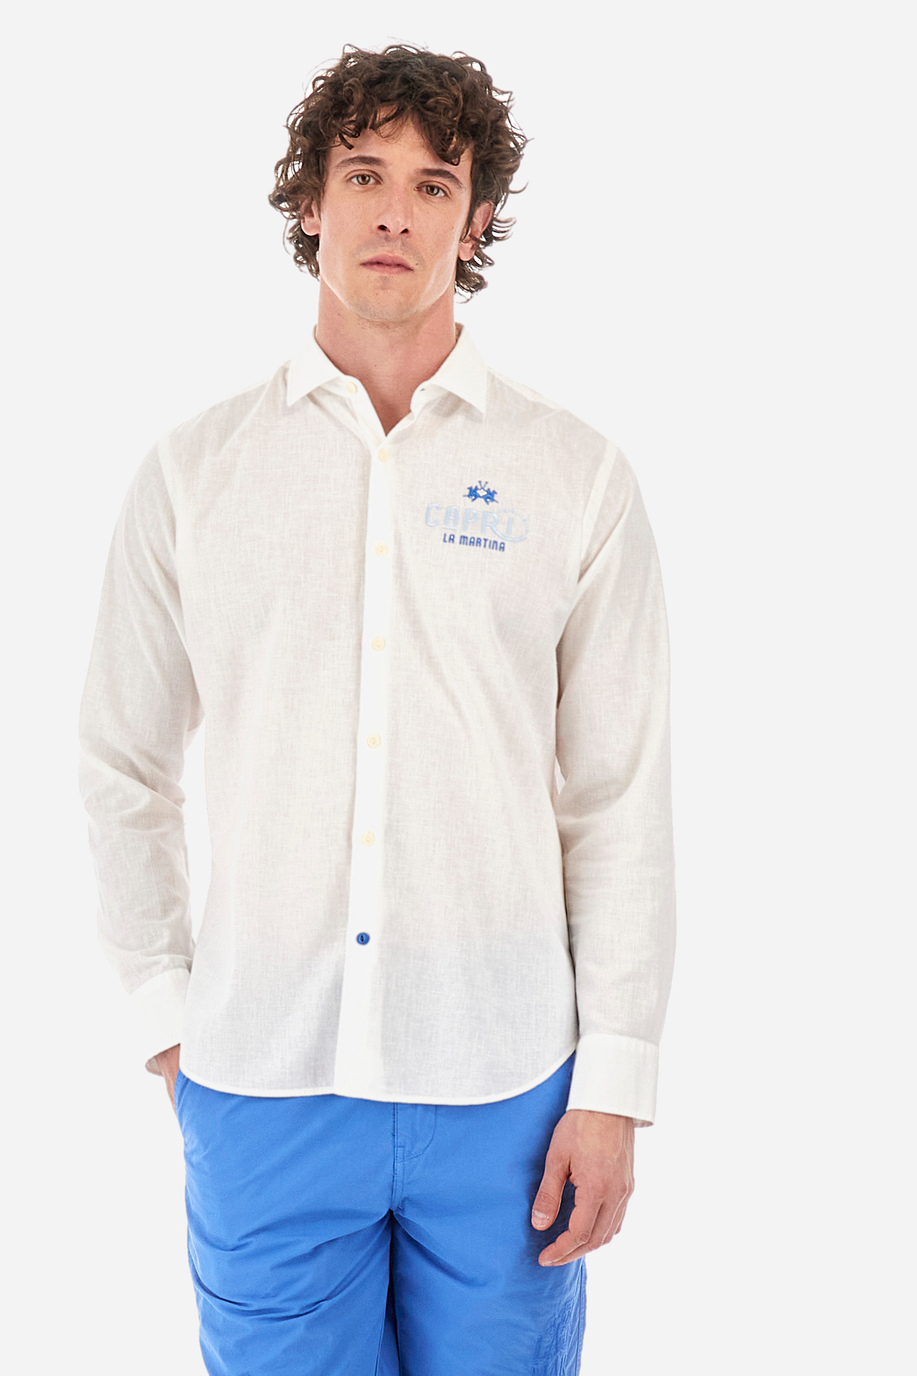 Cotton and linen shirt - Innocent - XLarge sizes | La Martina - Official Online Shop